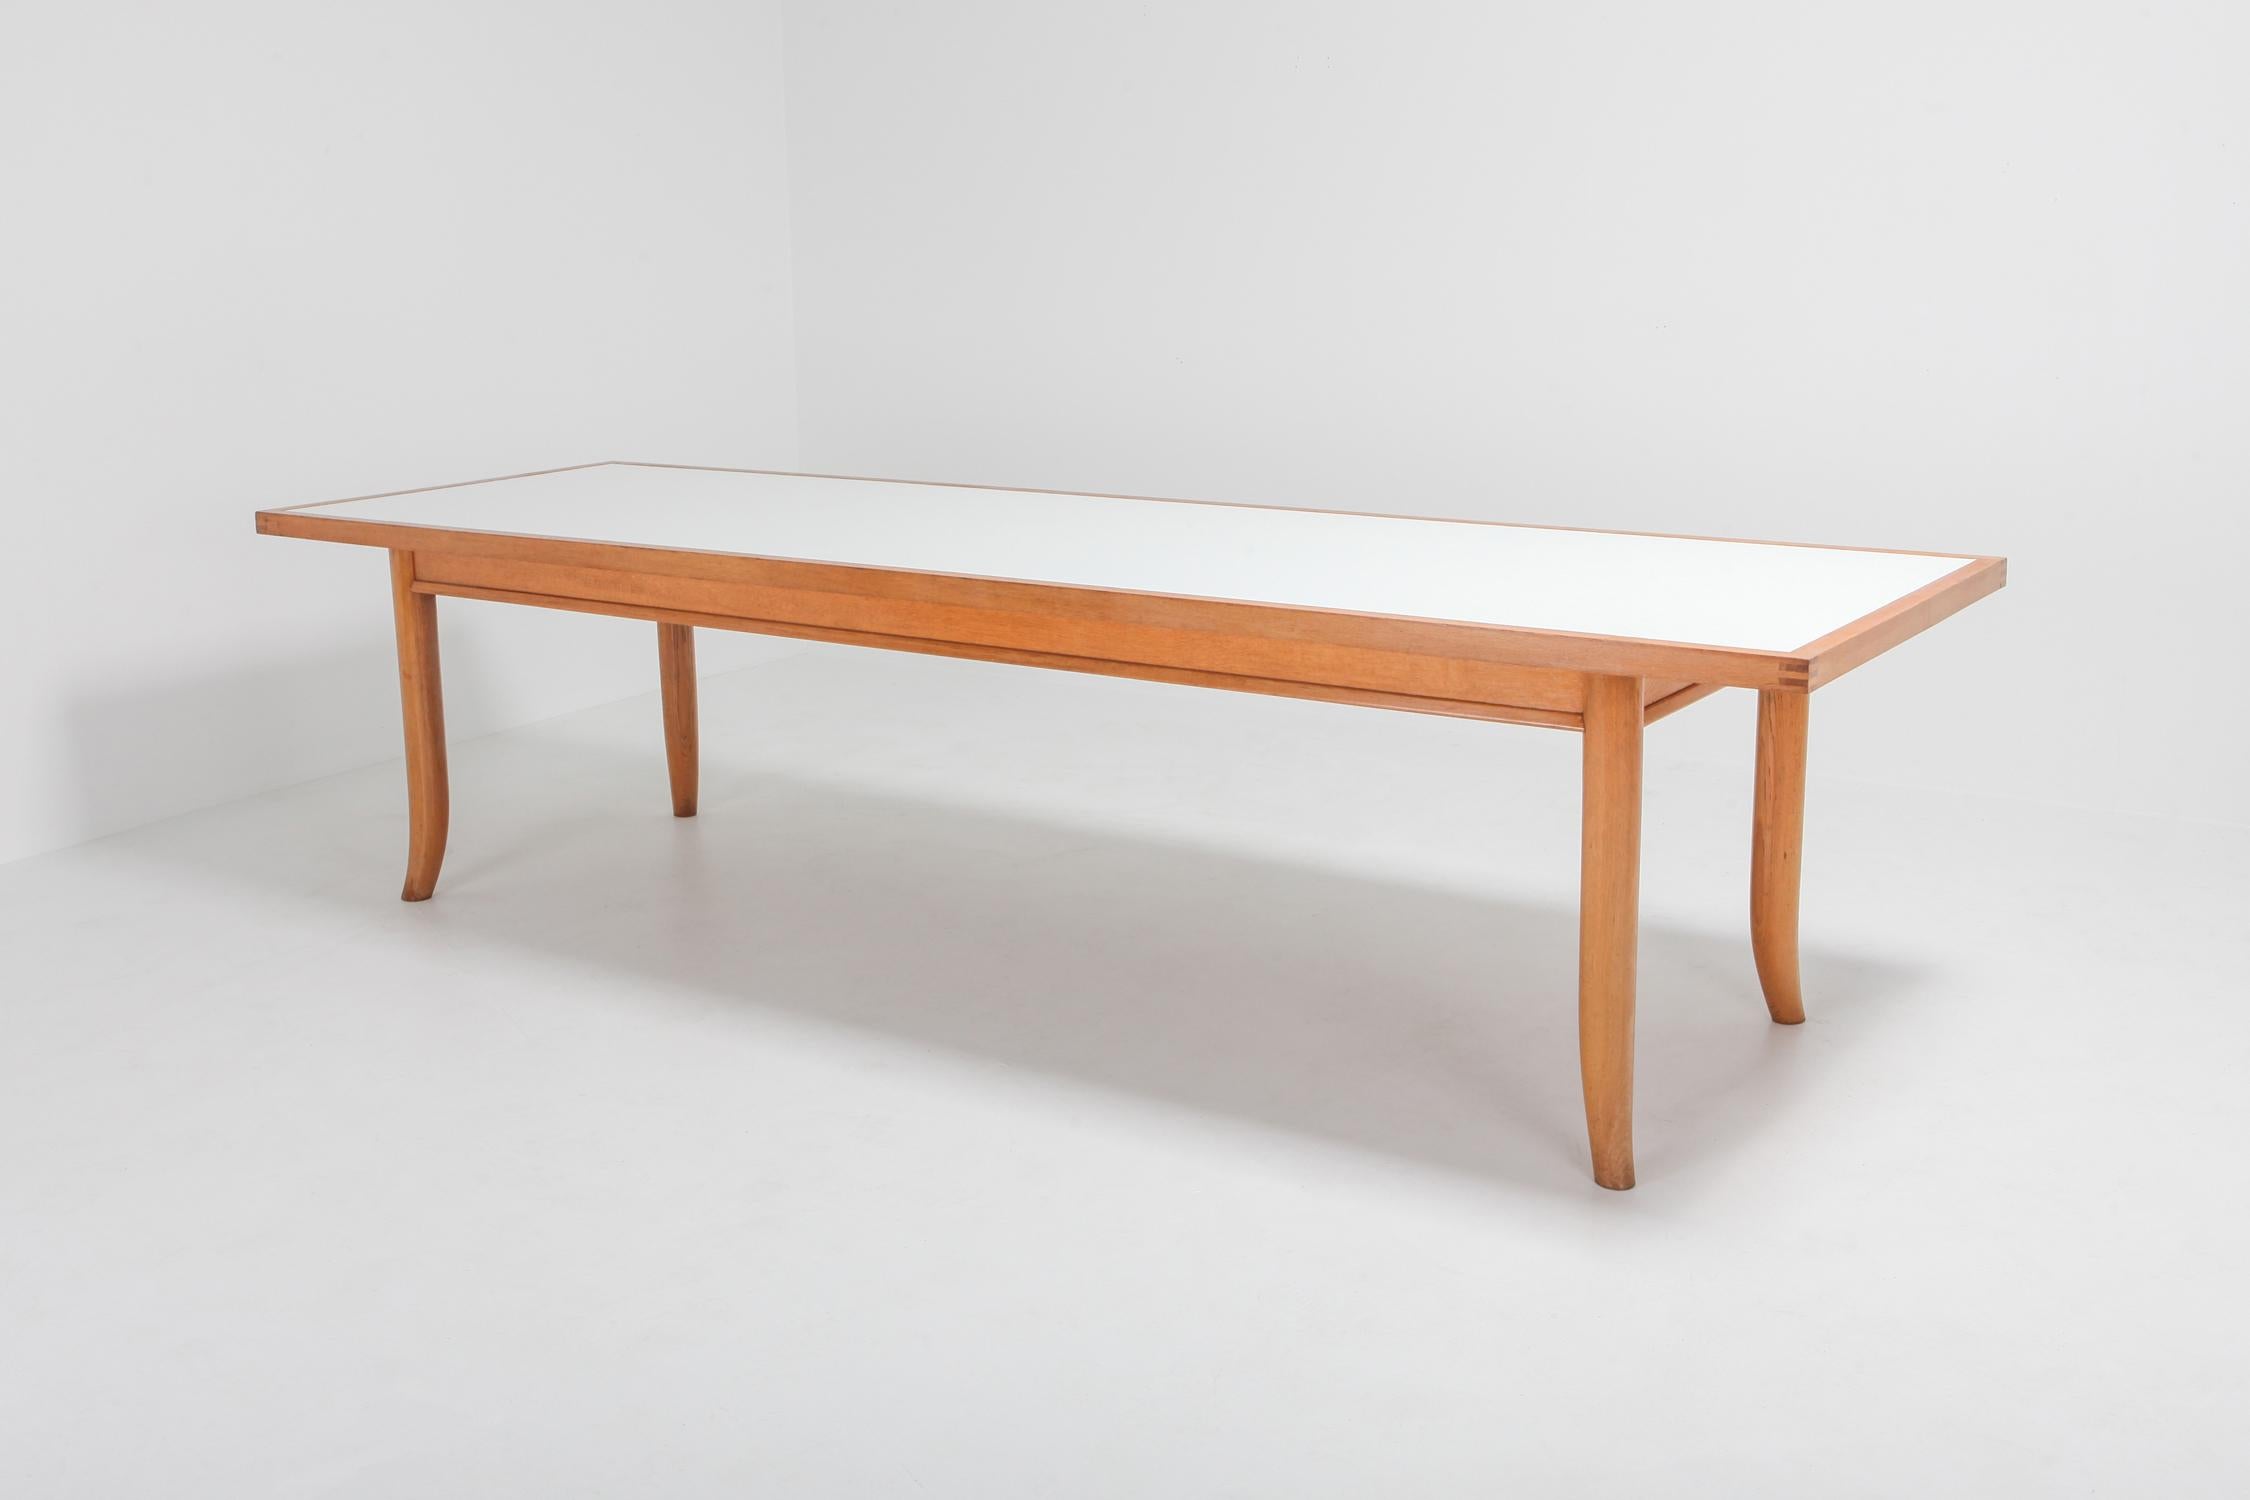 North American American Modern Oak Dining Table with Saber Legs by Robsjohn-Gibbings